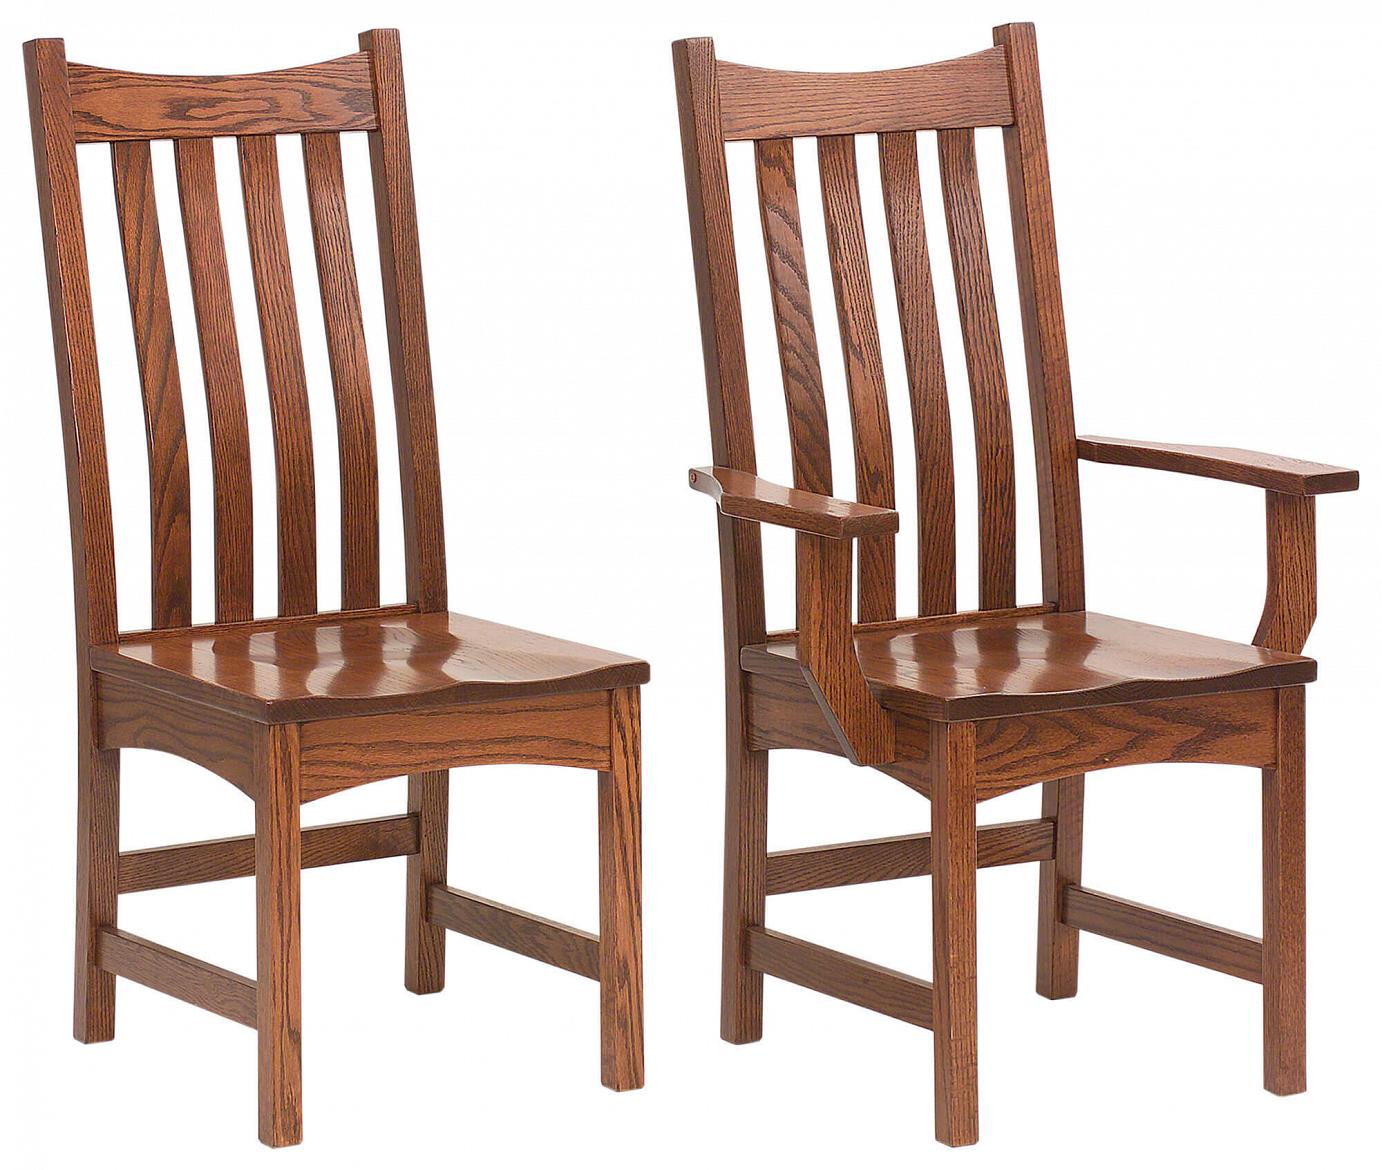 RH Yoder Bellingham Chairs